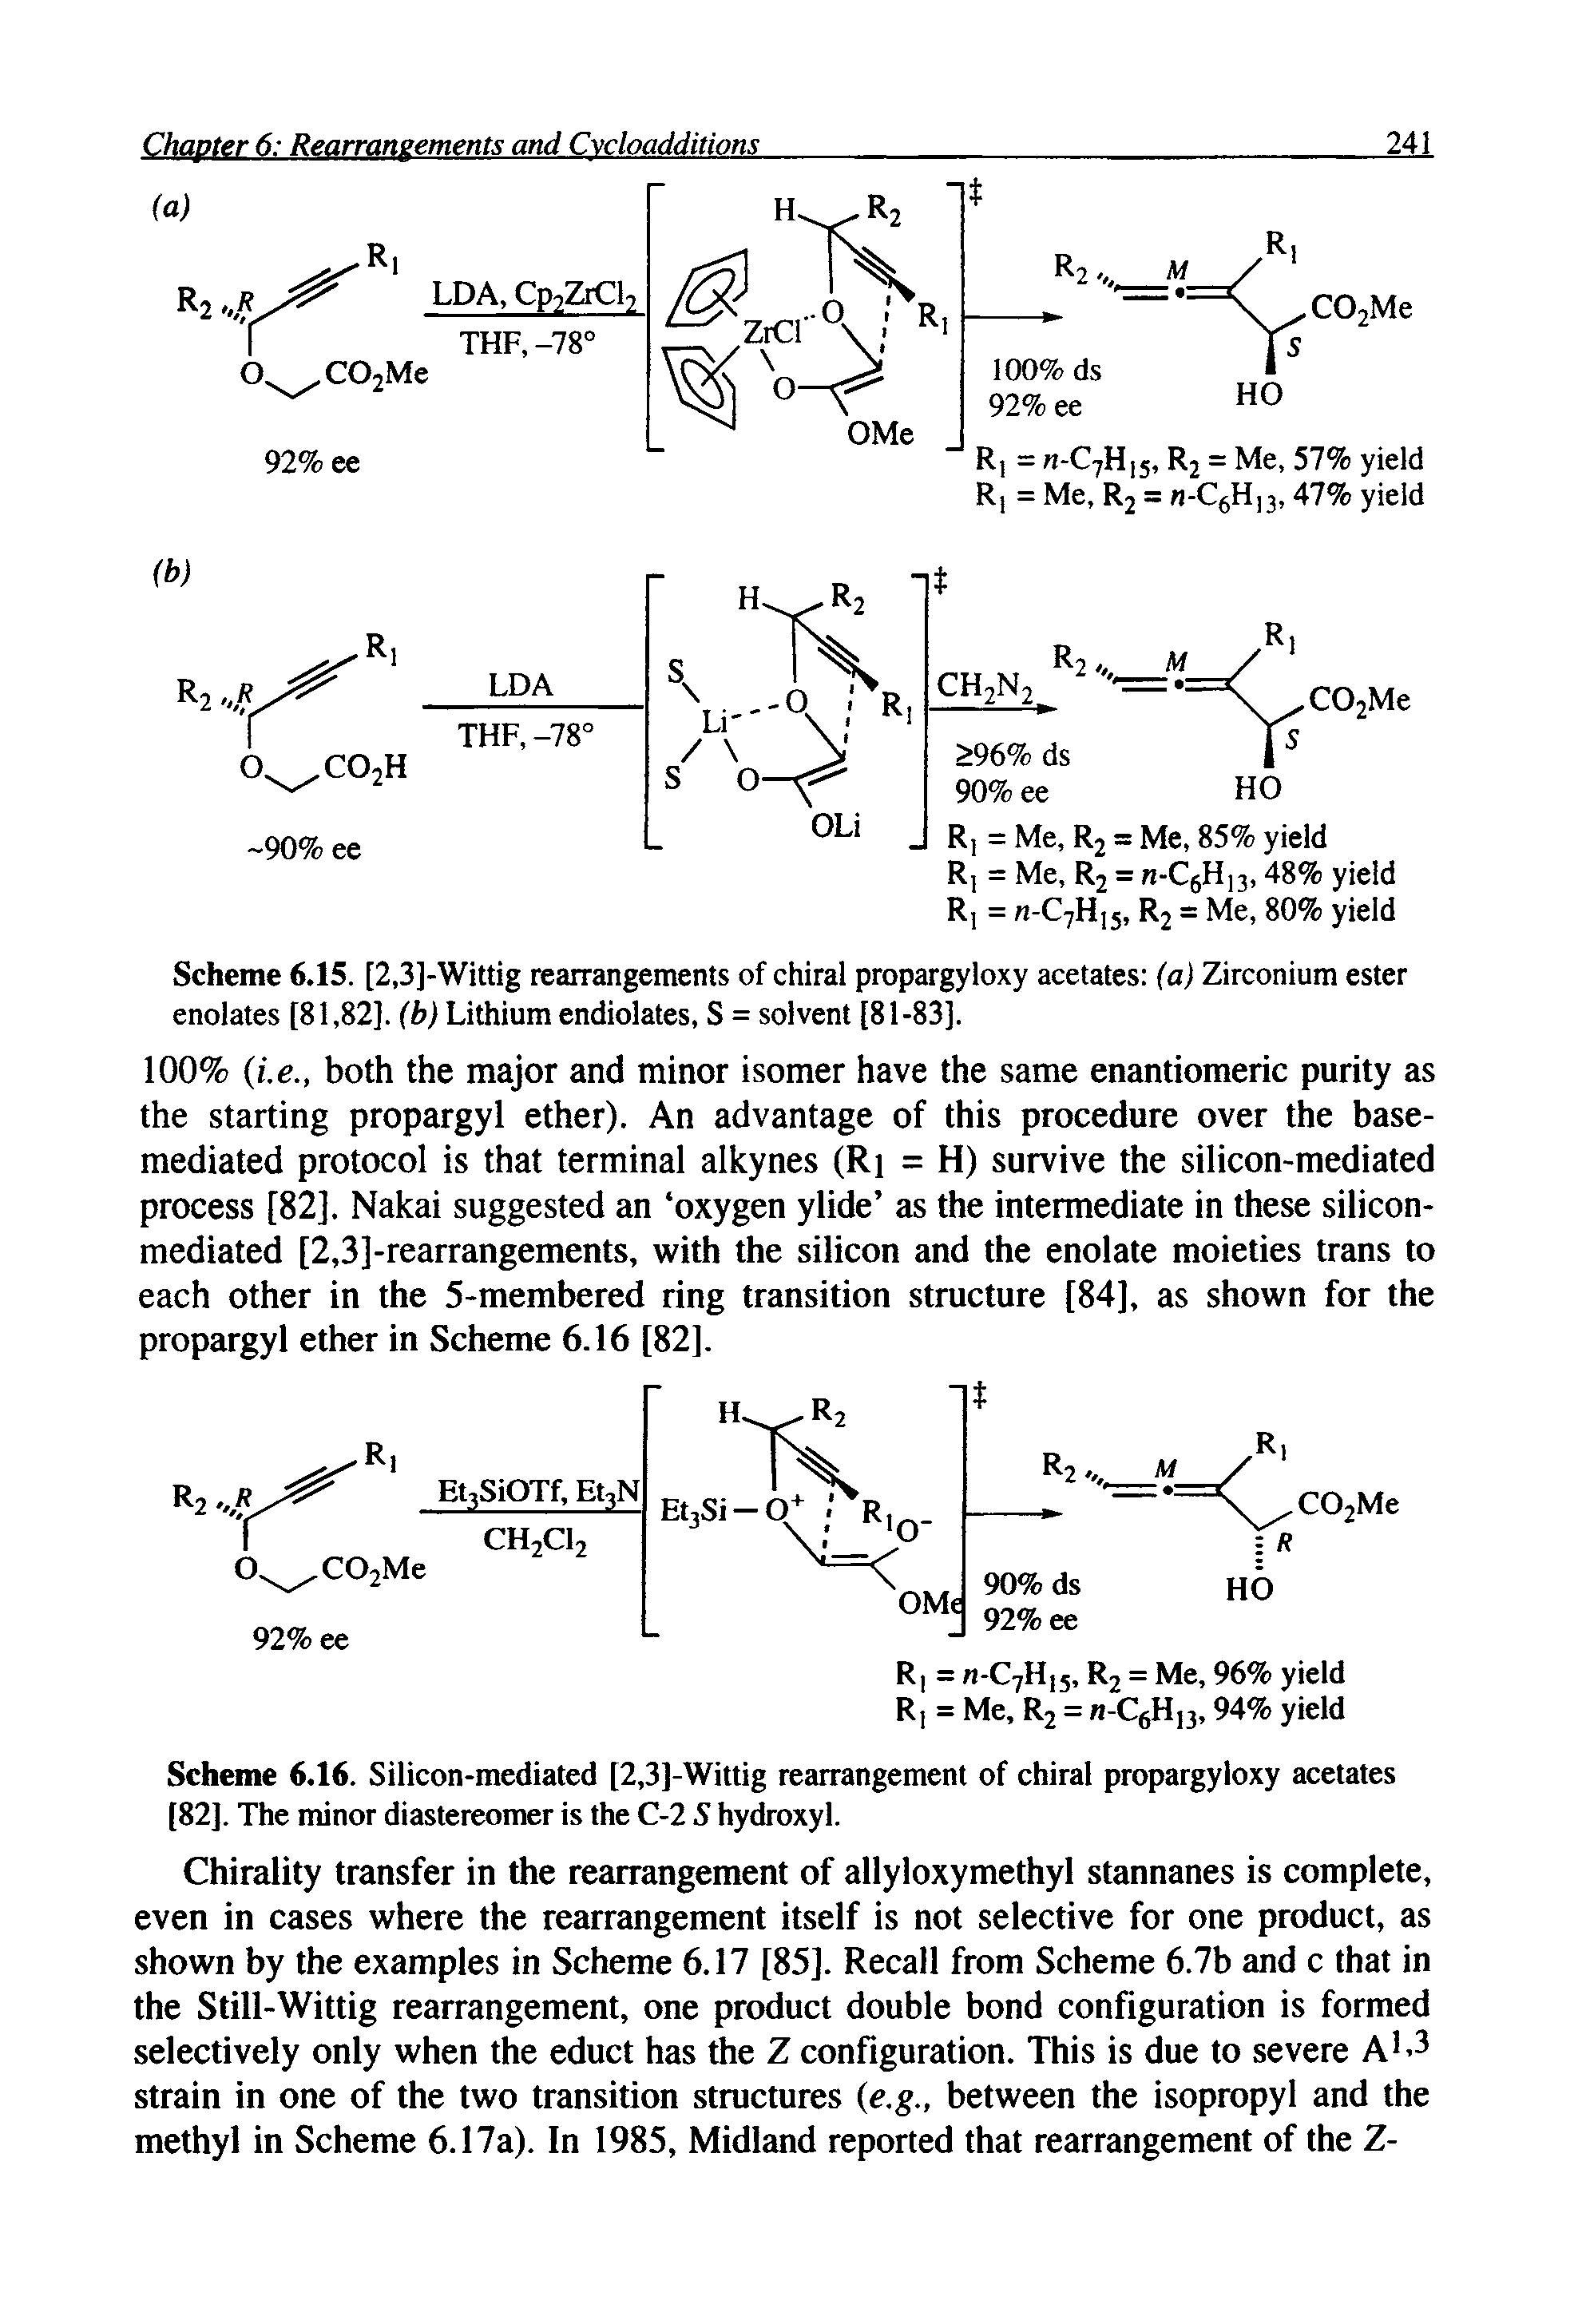 Scheme 6.15. [2,3]-Wittig rearrangements of chiral propargyloxy acetates (a) Zirconium ester enolates [81,82]. (b) Lithium endiolates, S = solvent [81-83].